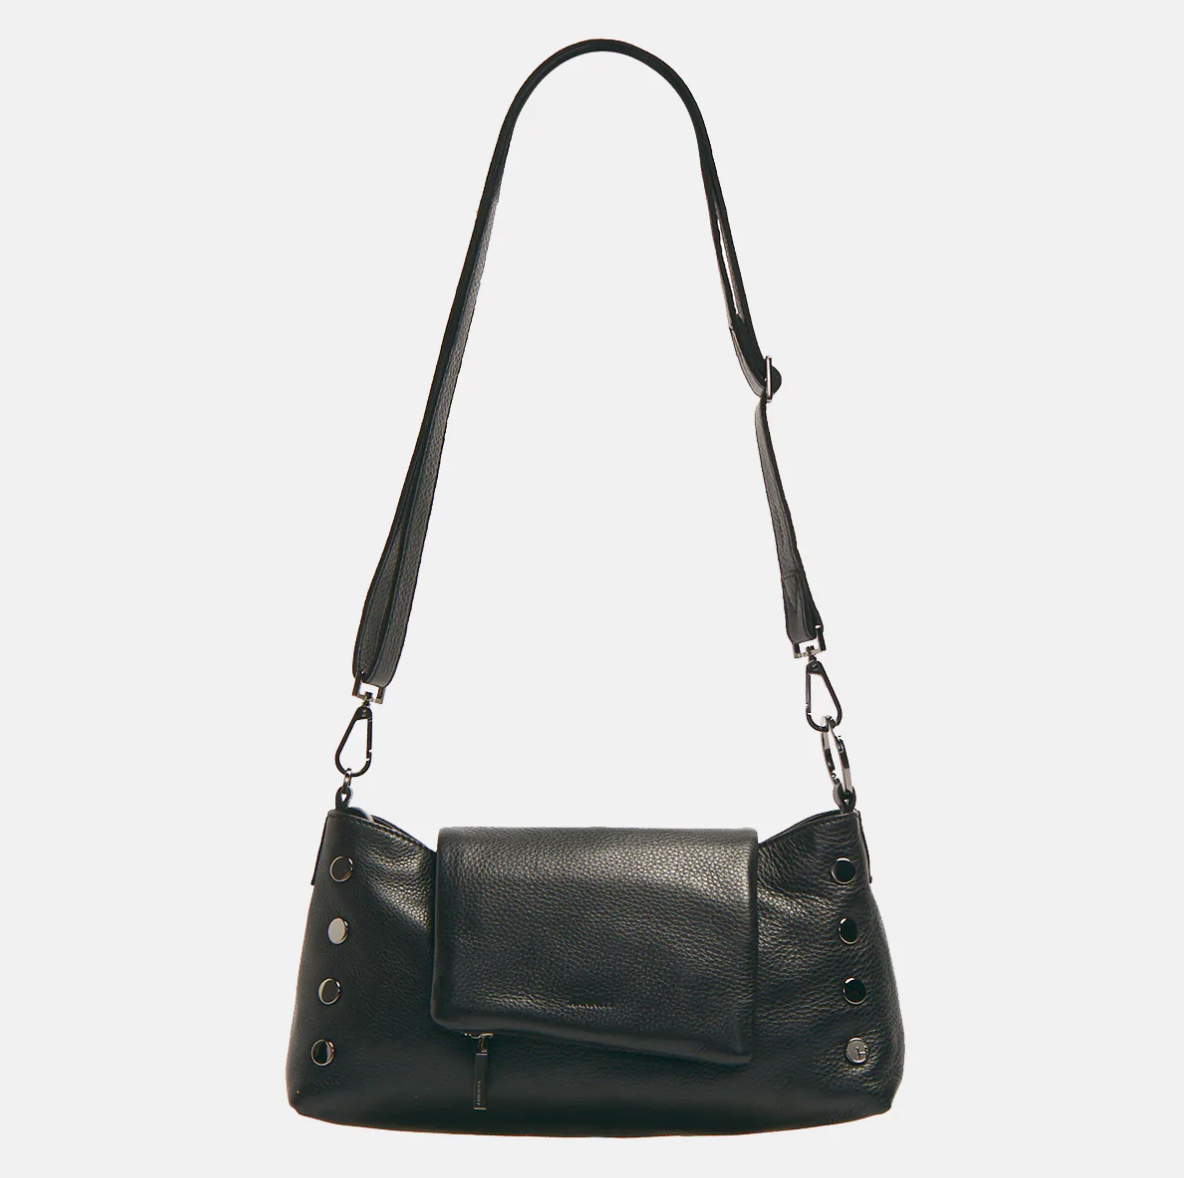 HAMMITT VIP Satchel Leather Shoulder Bag - black/gunmetal